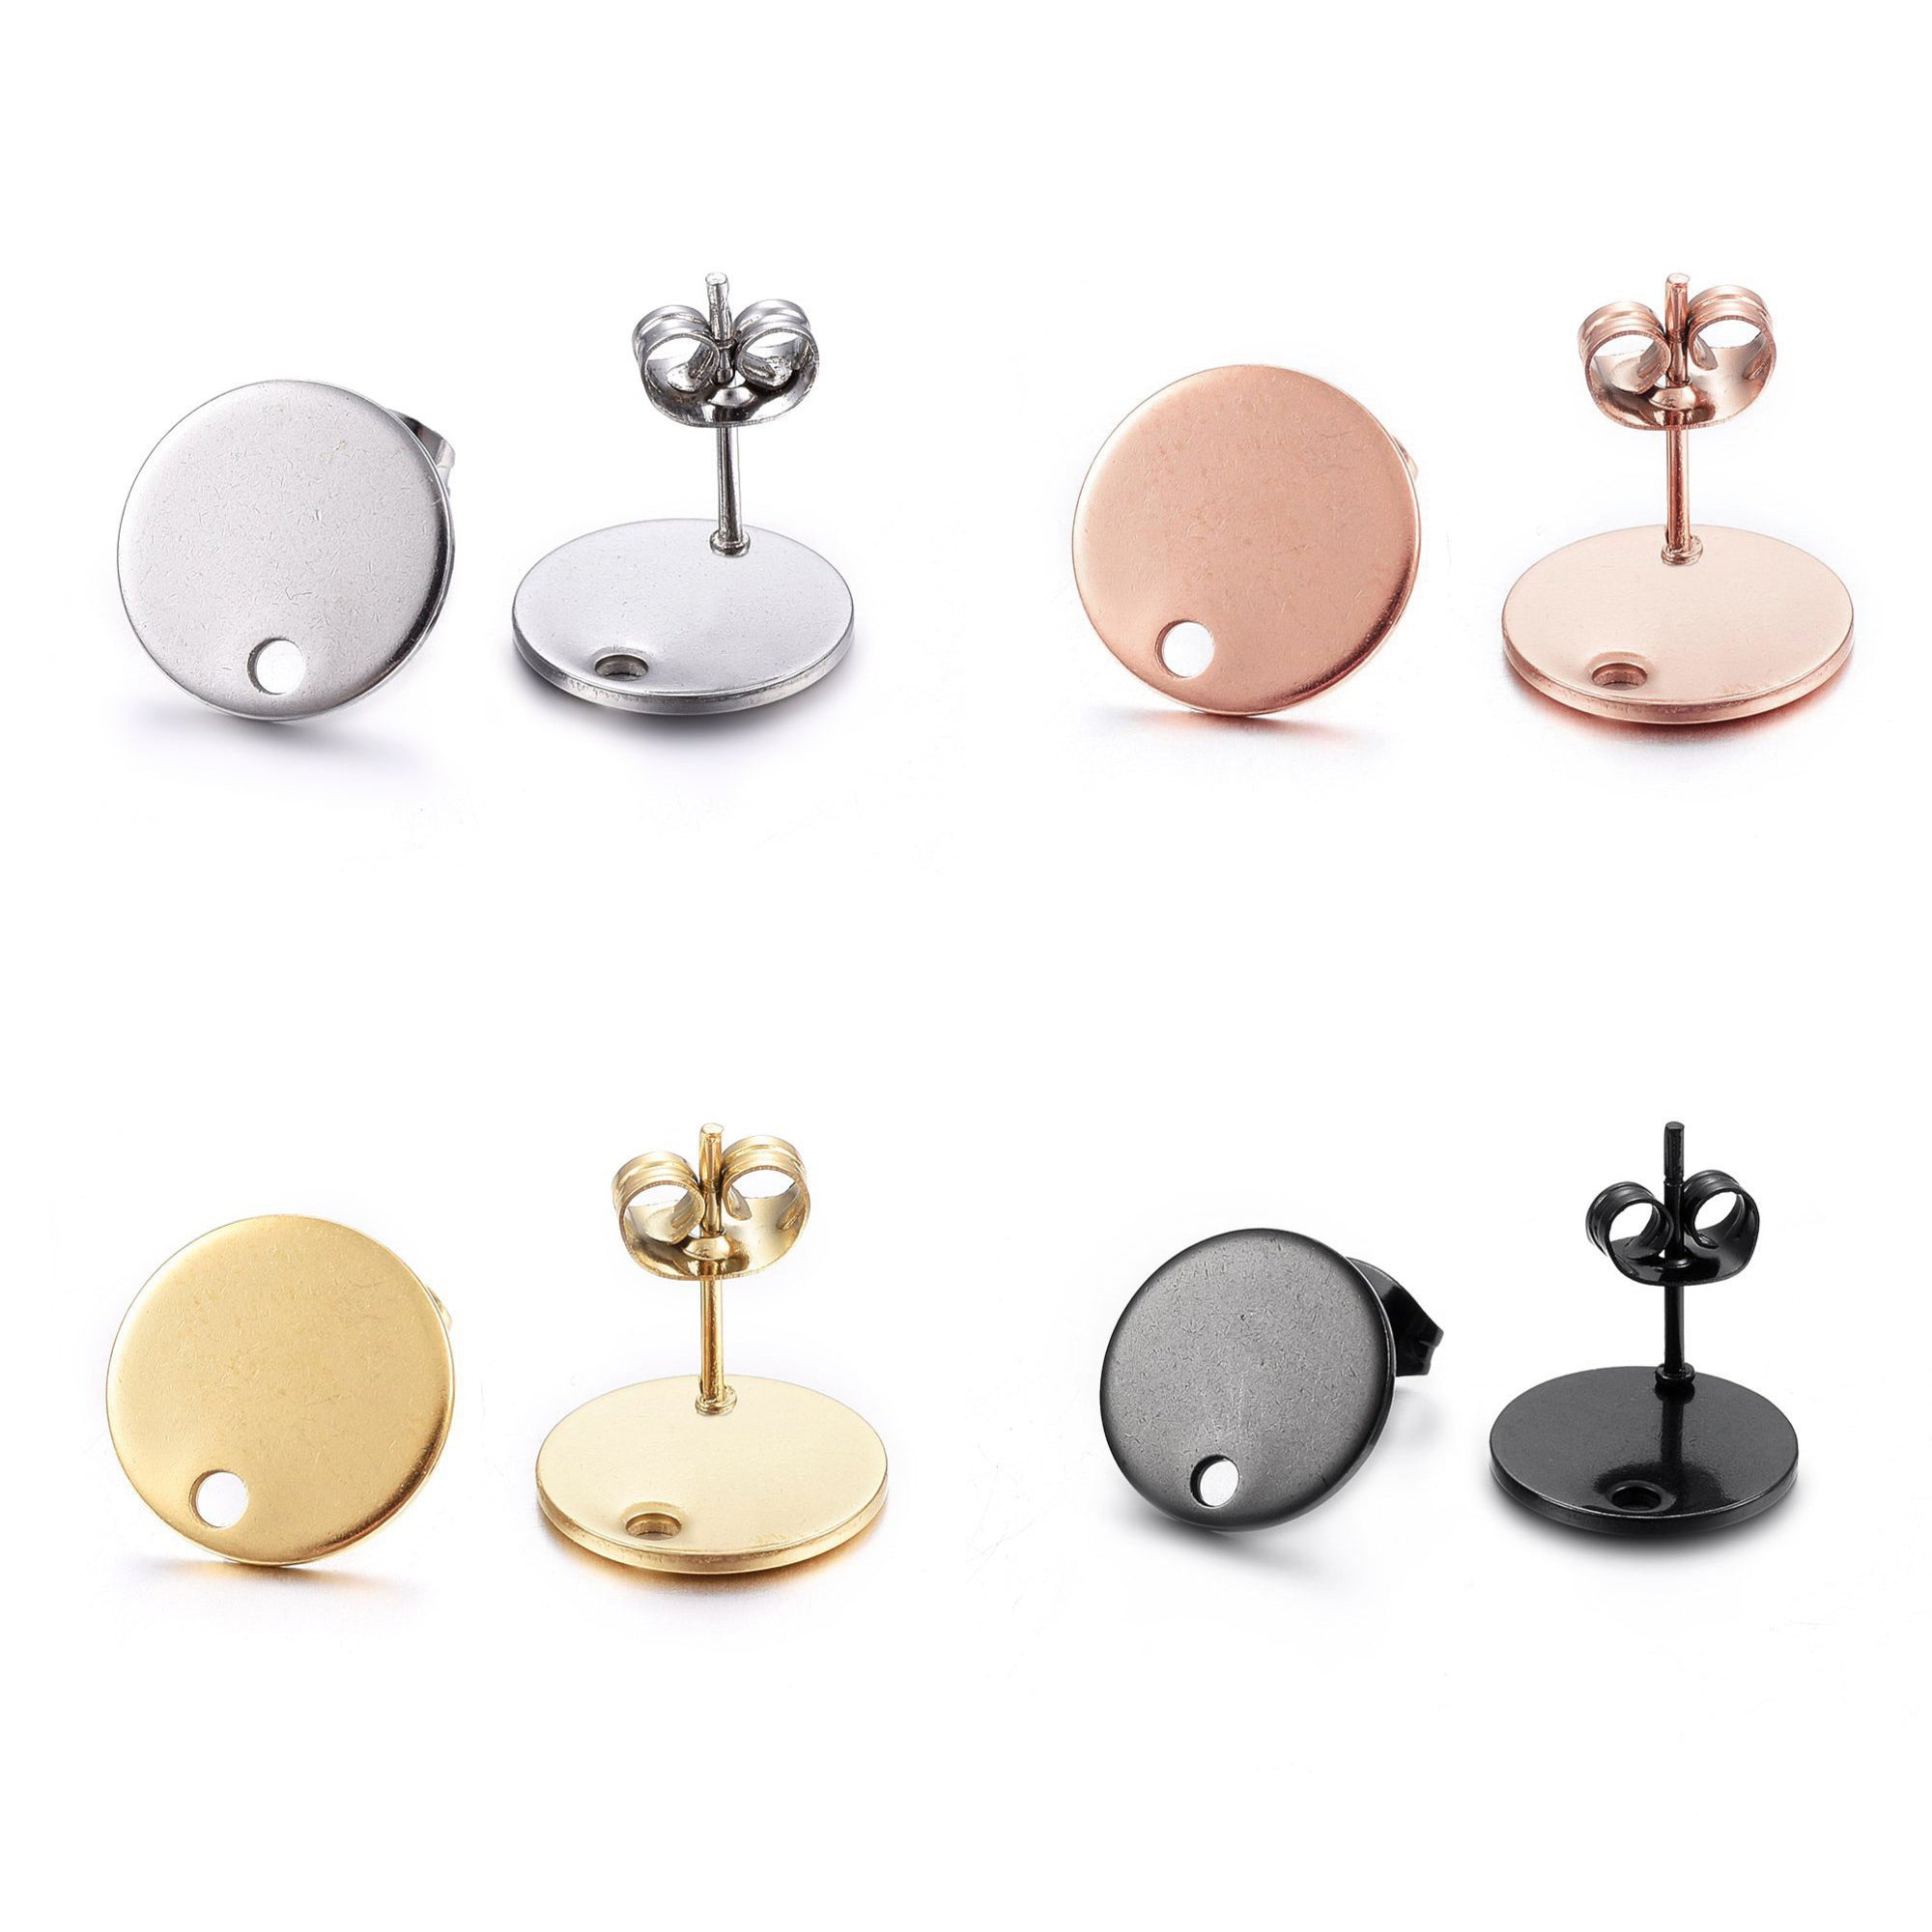 50pcs/set Stainless Steel Earrings Posts & Backs for DIY Stud Earrings  Jewelry Making Findings